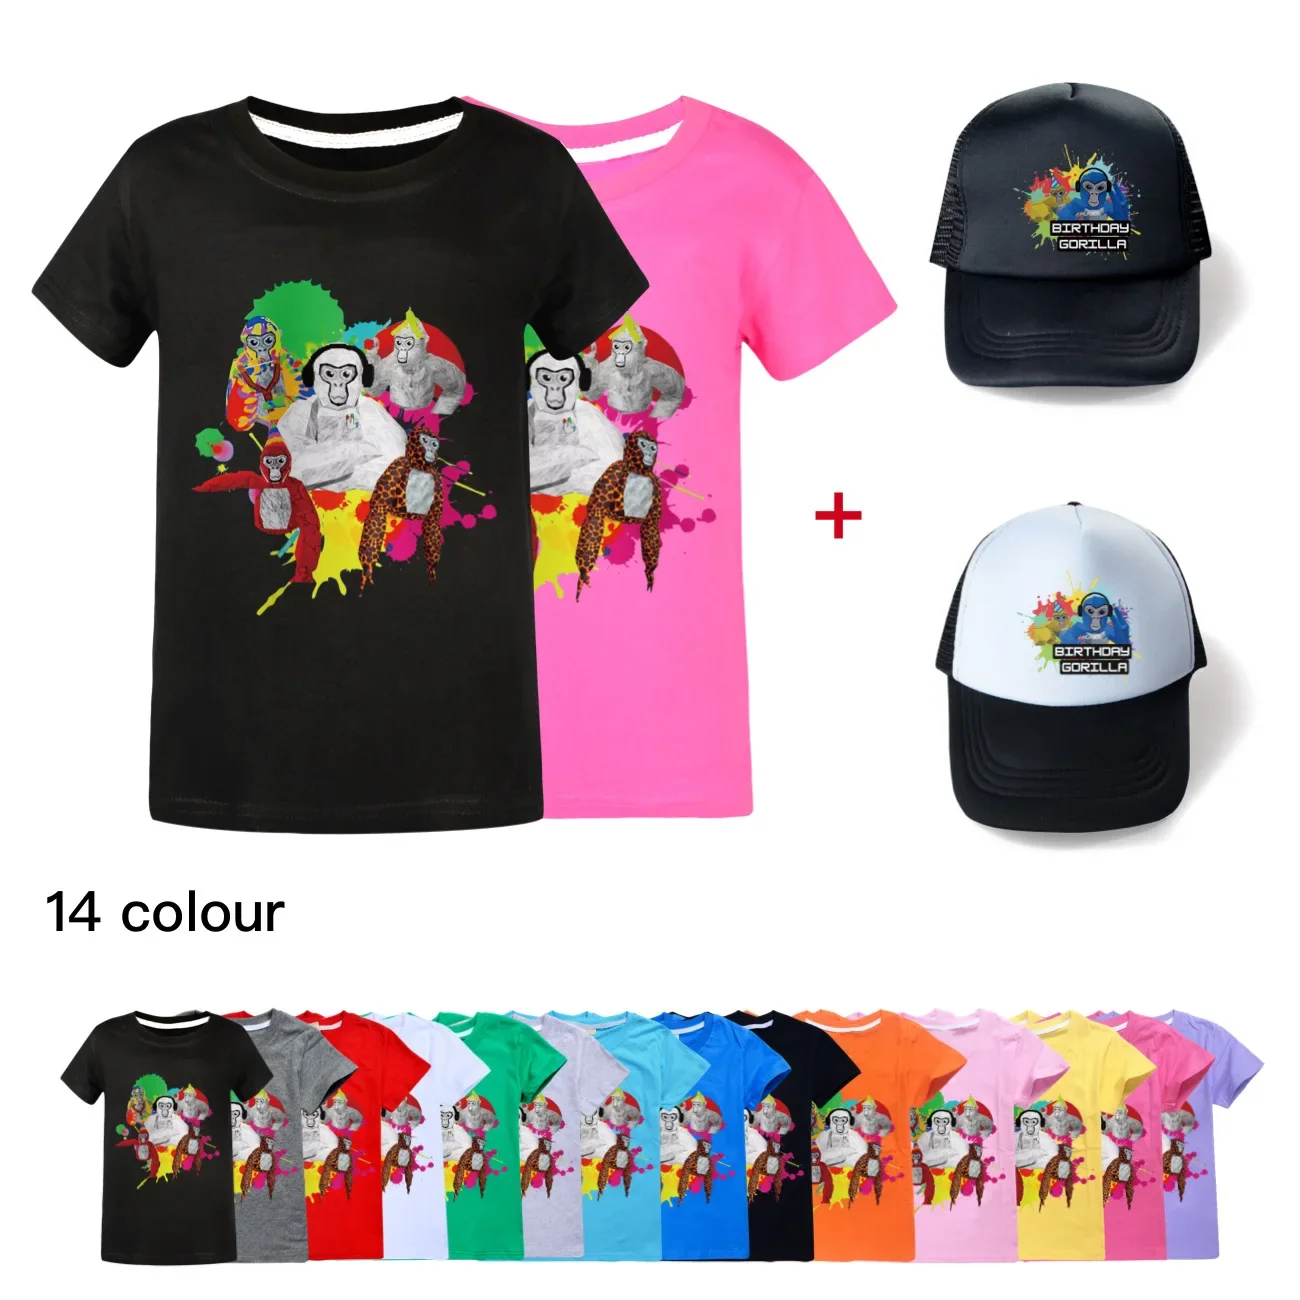 

Newest VR Game Gorilla Tag Clothes Kids Summer Tshirt Little Girls Fashion Cotton T-shirt&Sunhat 2pcs Set Boys Short Sleeve Tops